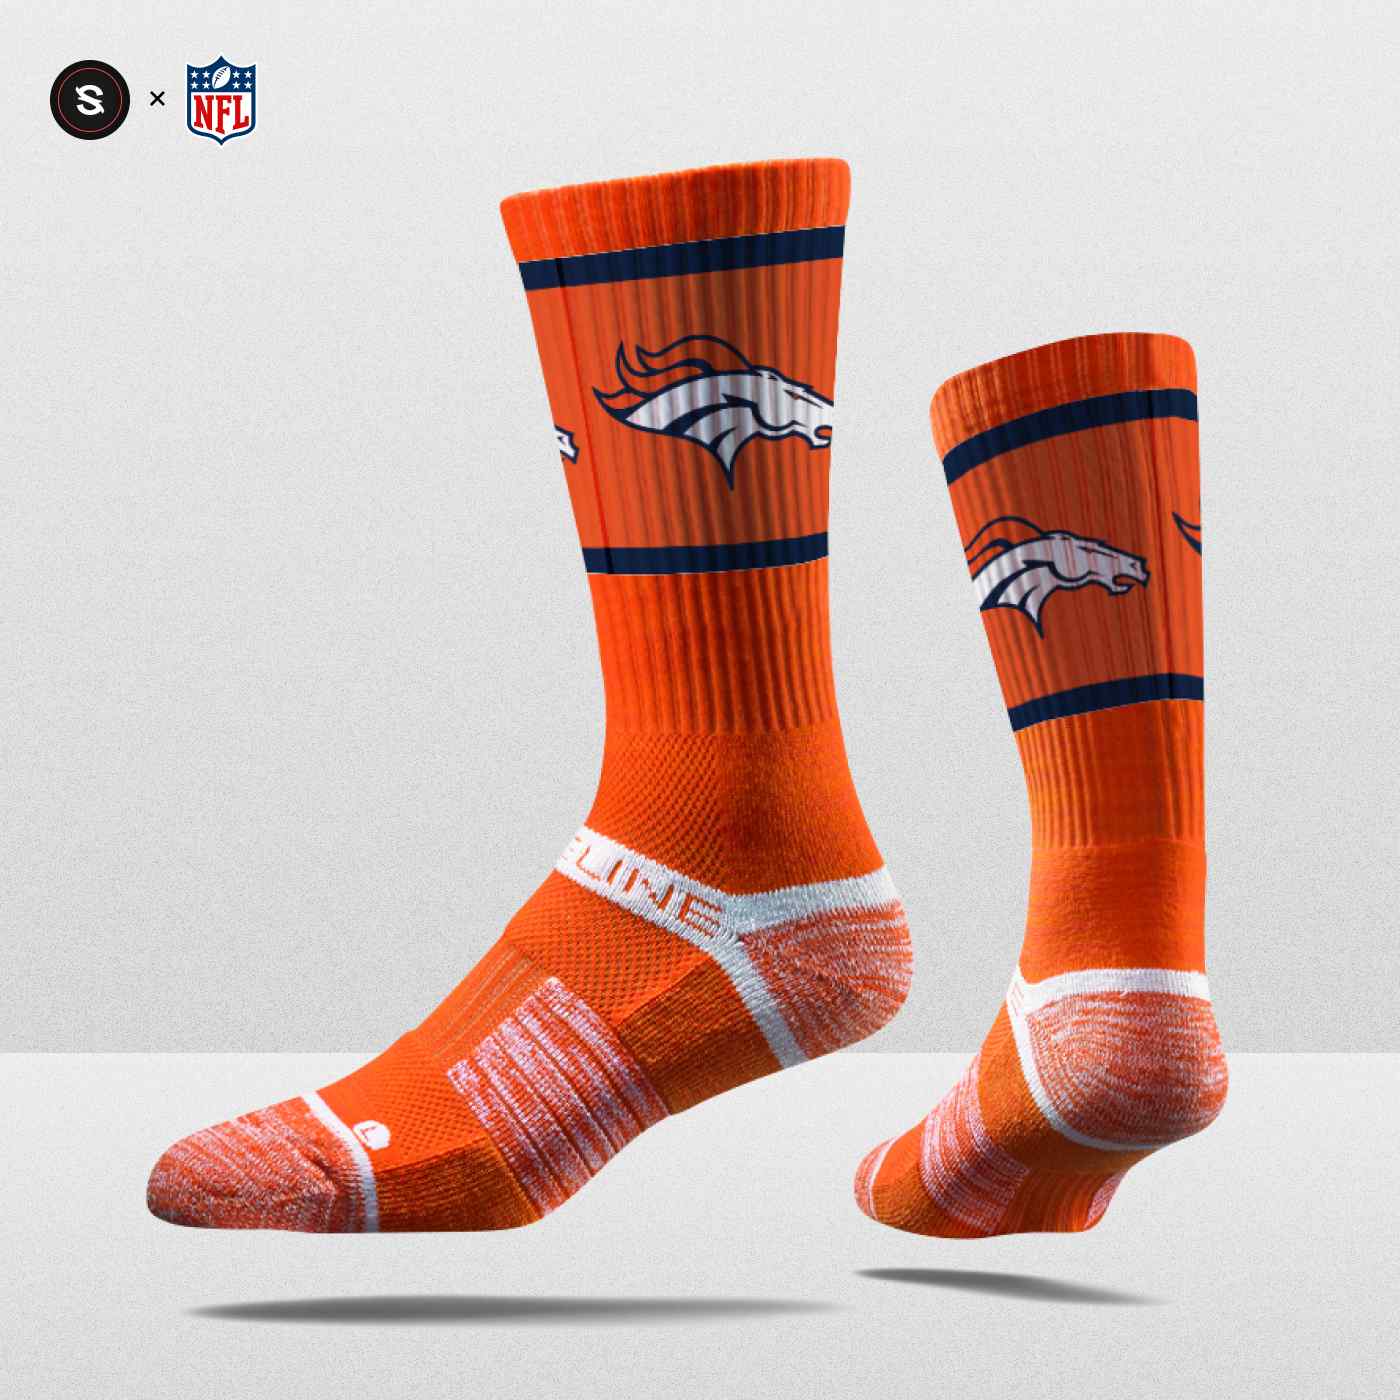 Denver Broncos socks